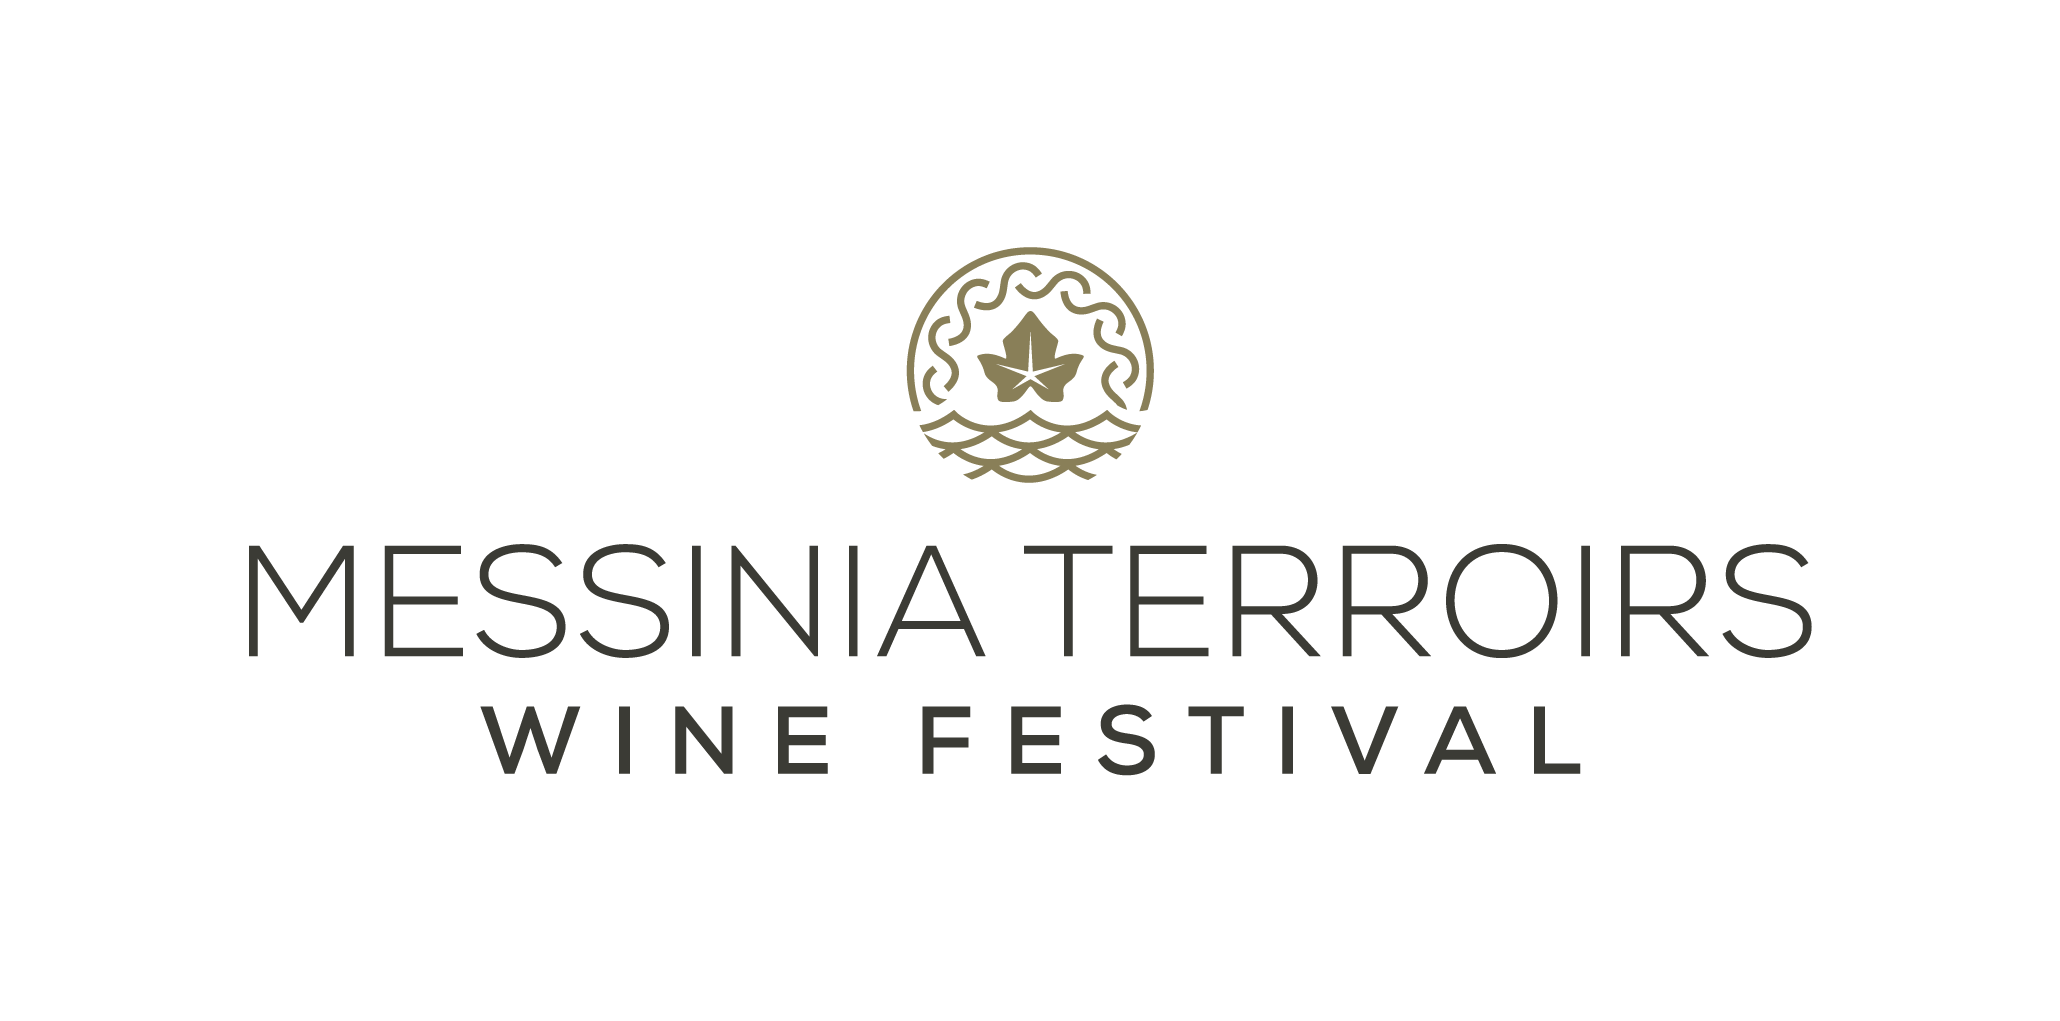 Messinia Terroirs Wine Festival